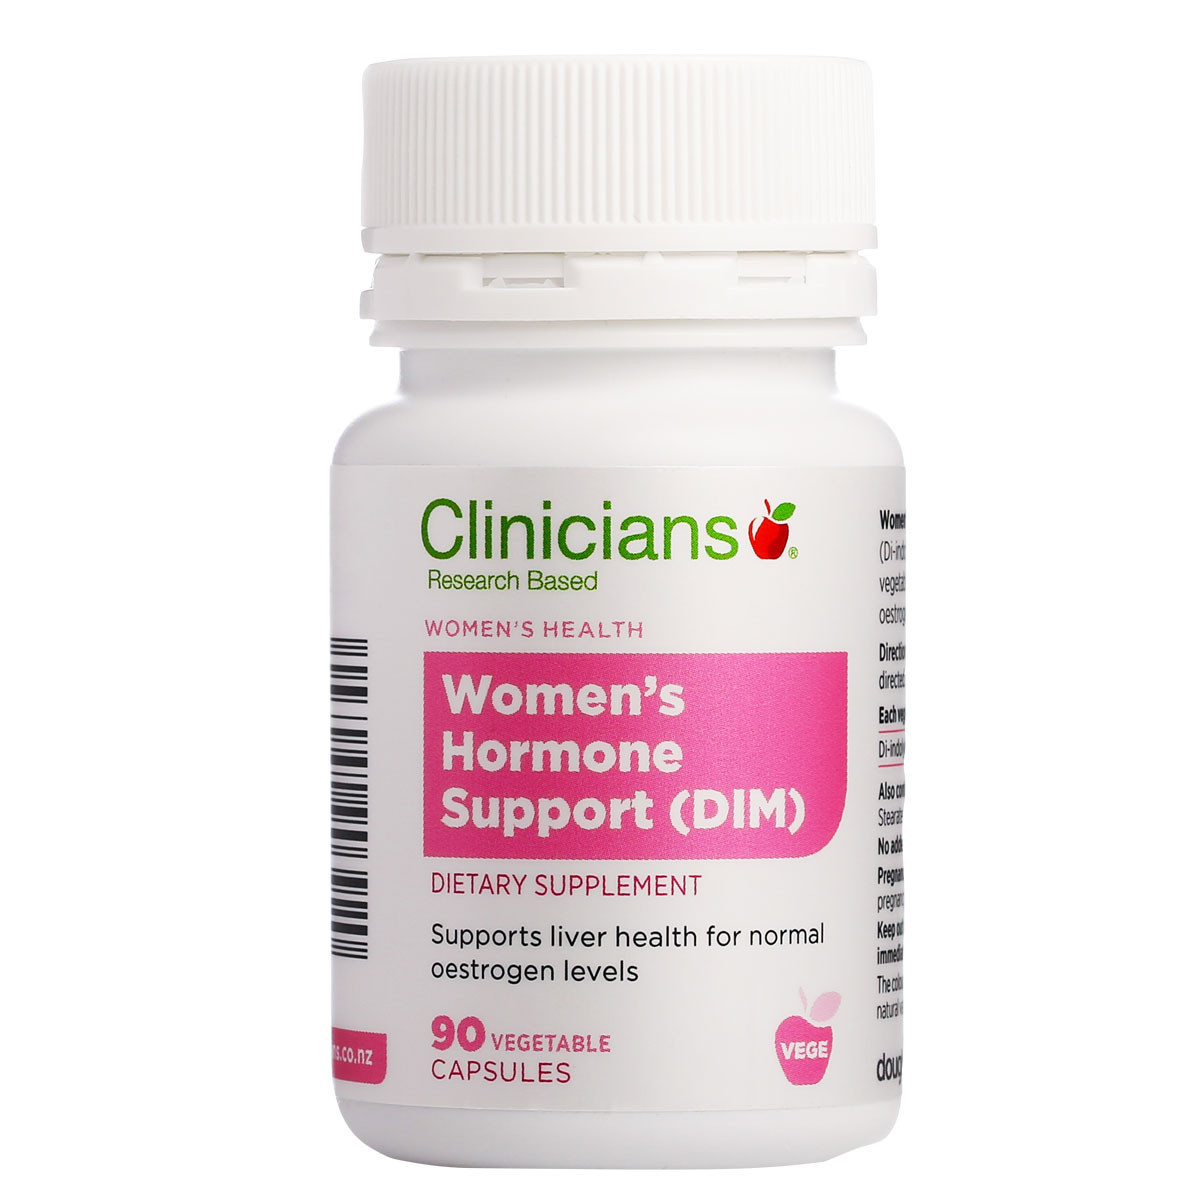 Clinicians Women's Hormone Support (DIM)